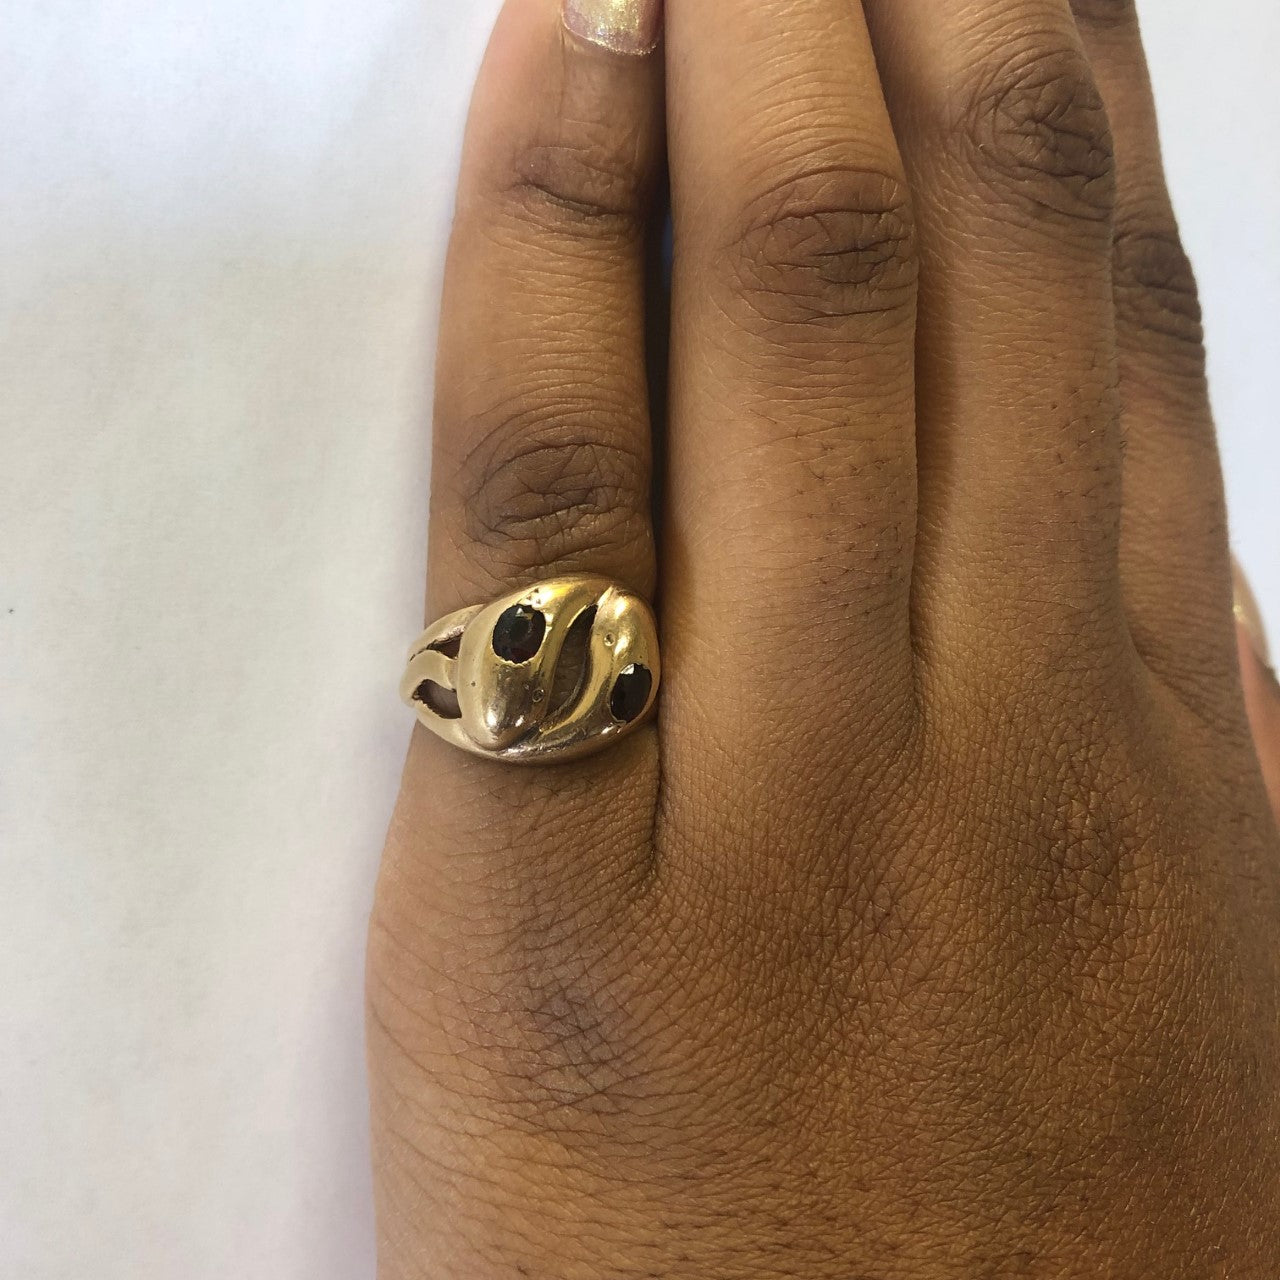 Victorian Garnet Serpent Wedding Ring | 0.76ctw | SZ 6.5 |